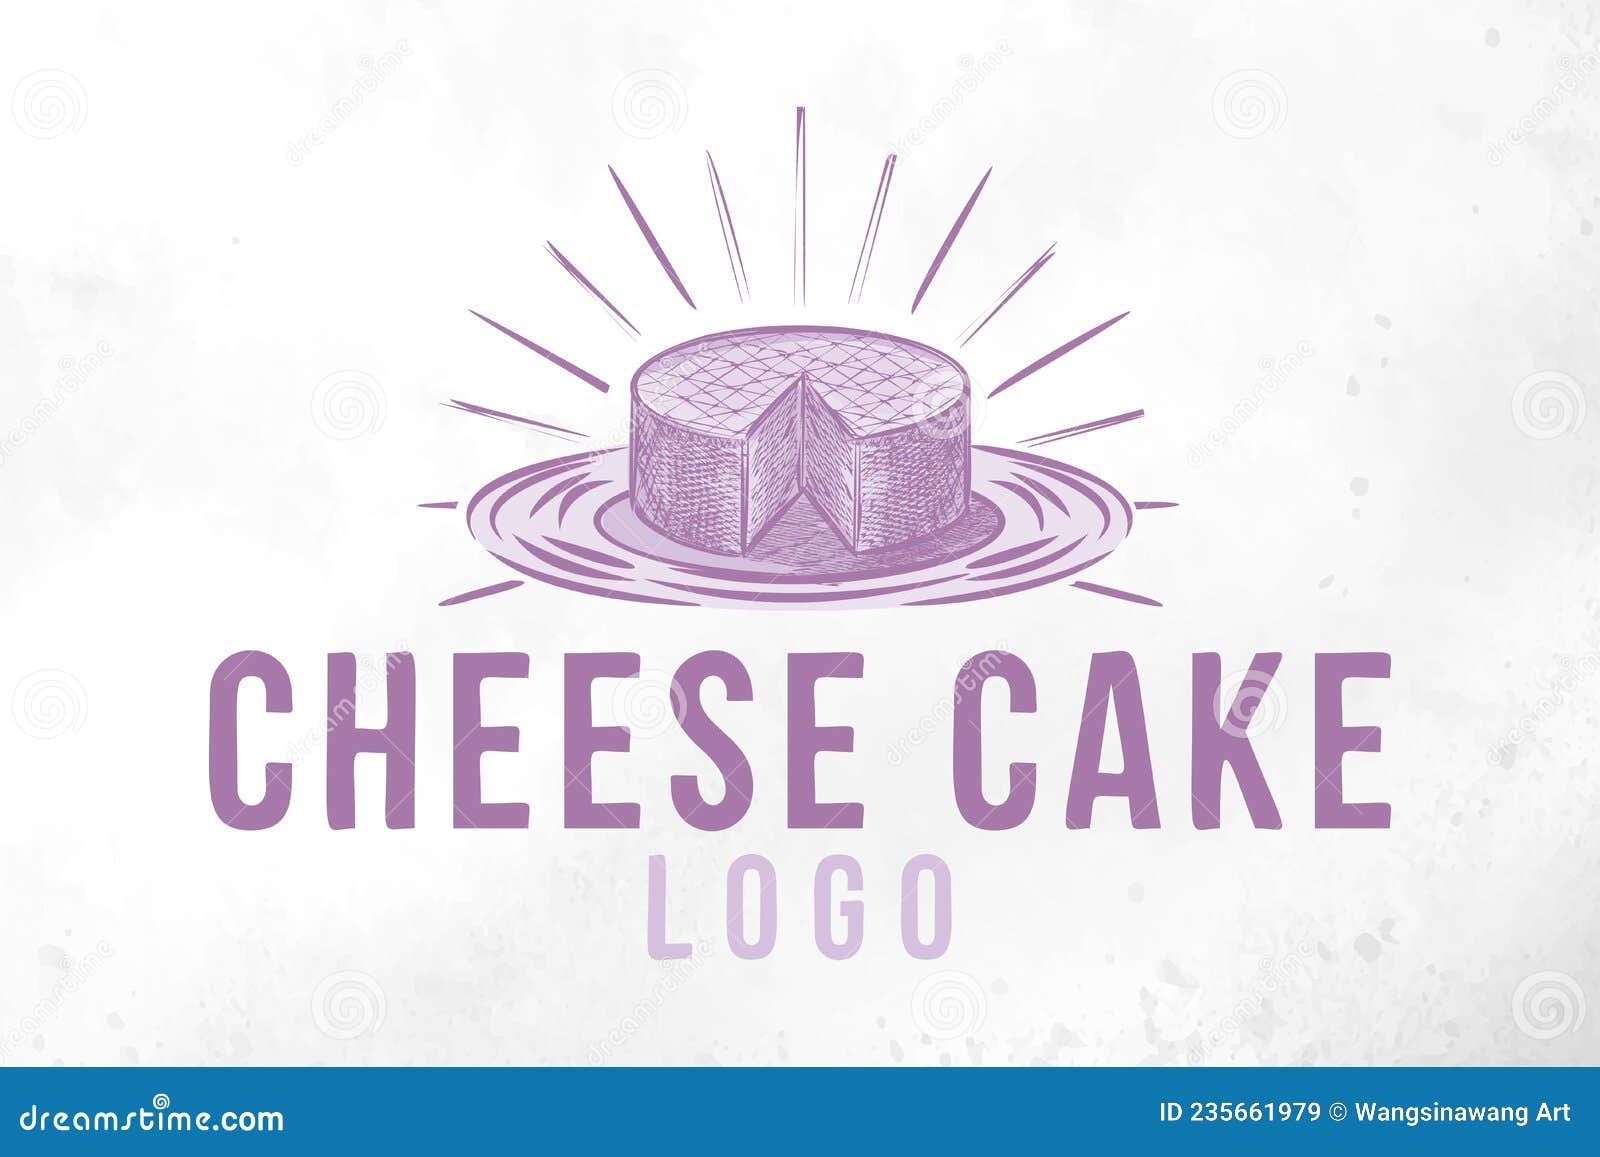 cheesecake logo ideas 5